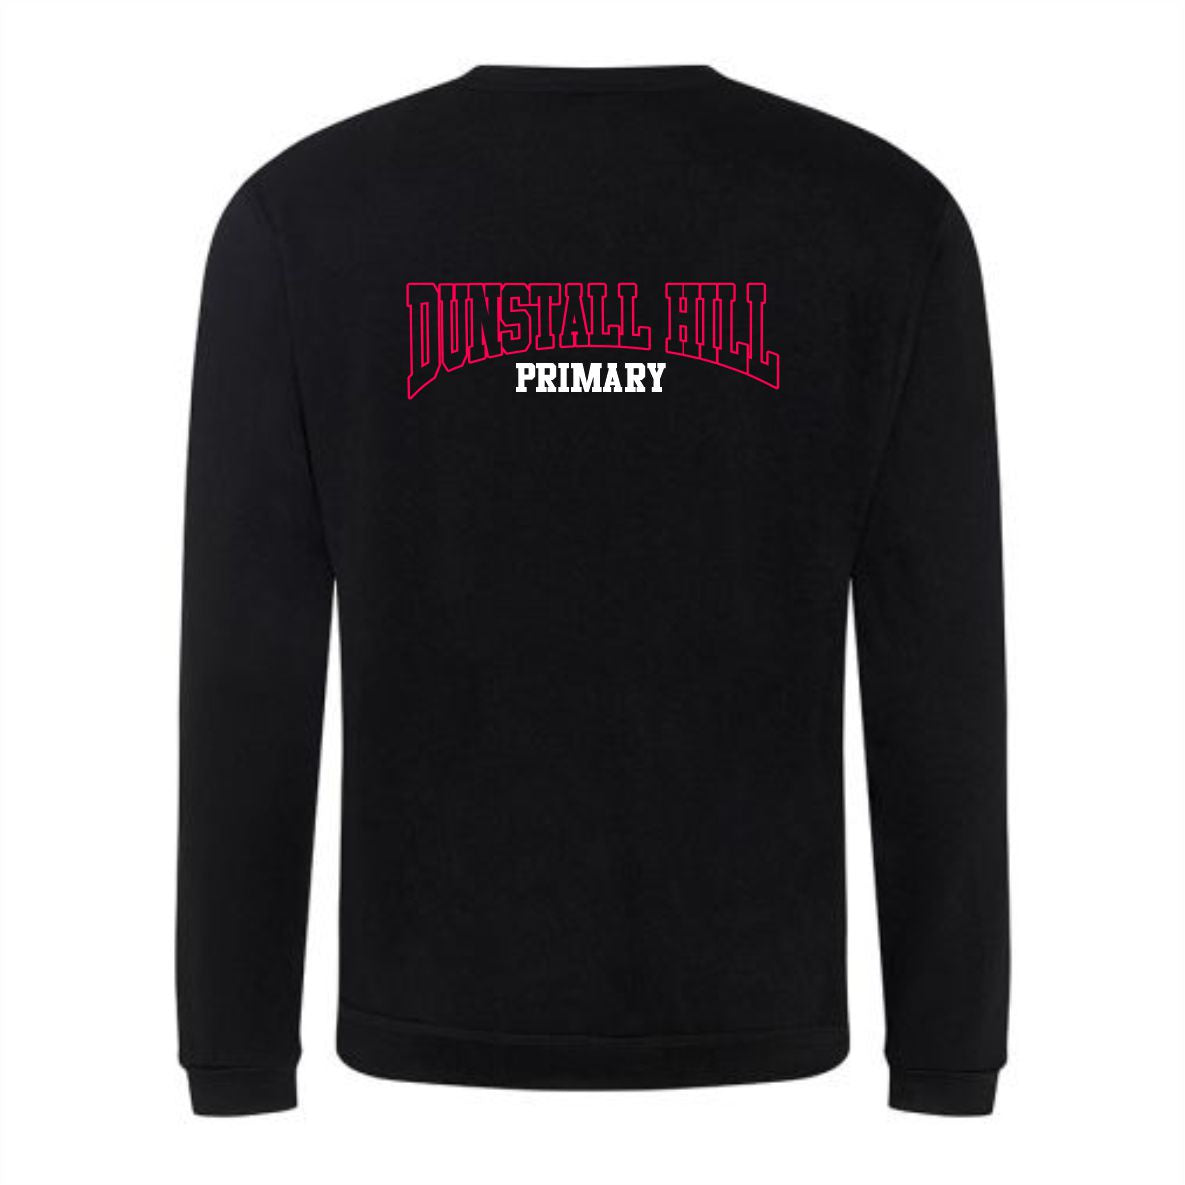 Dunstall Hill Primary Staff - Varsity Sweater